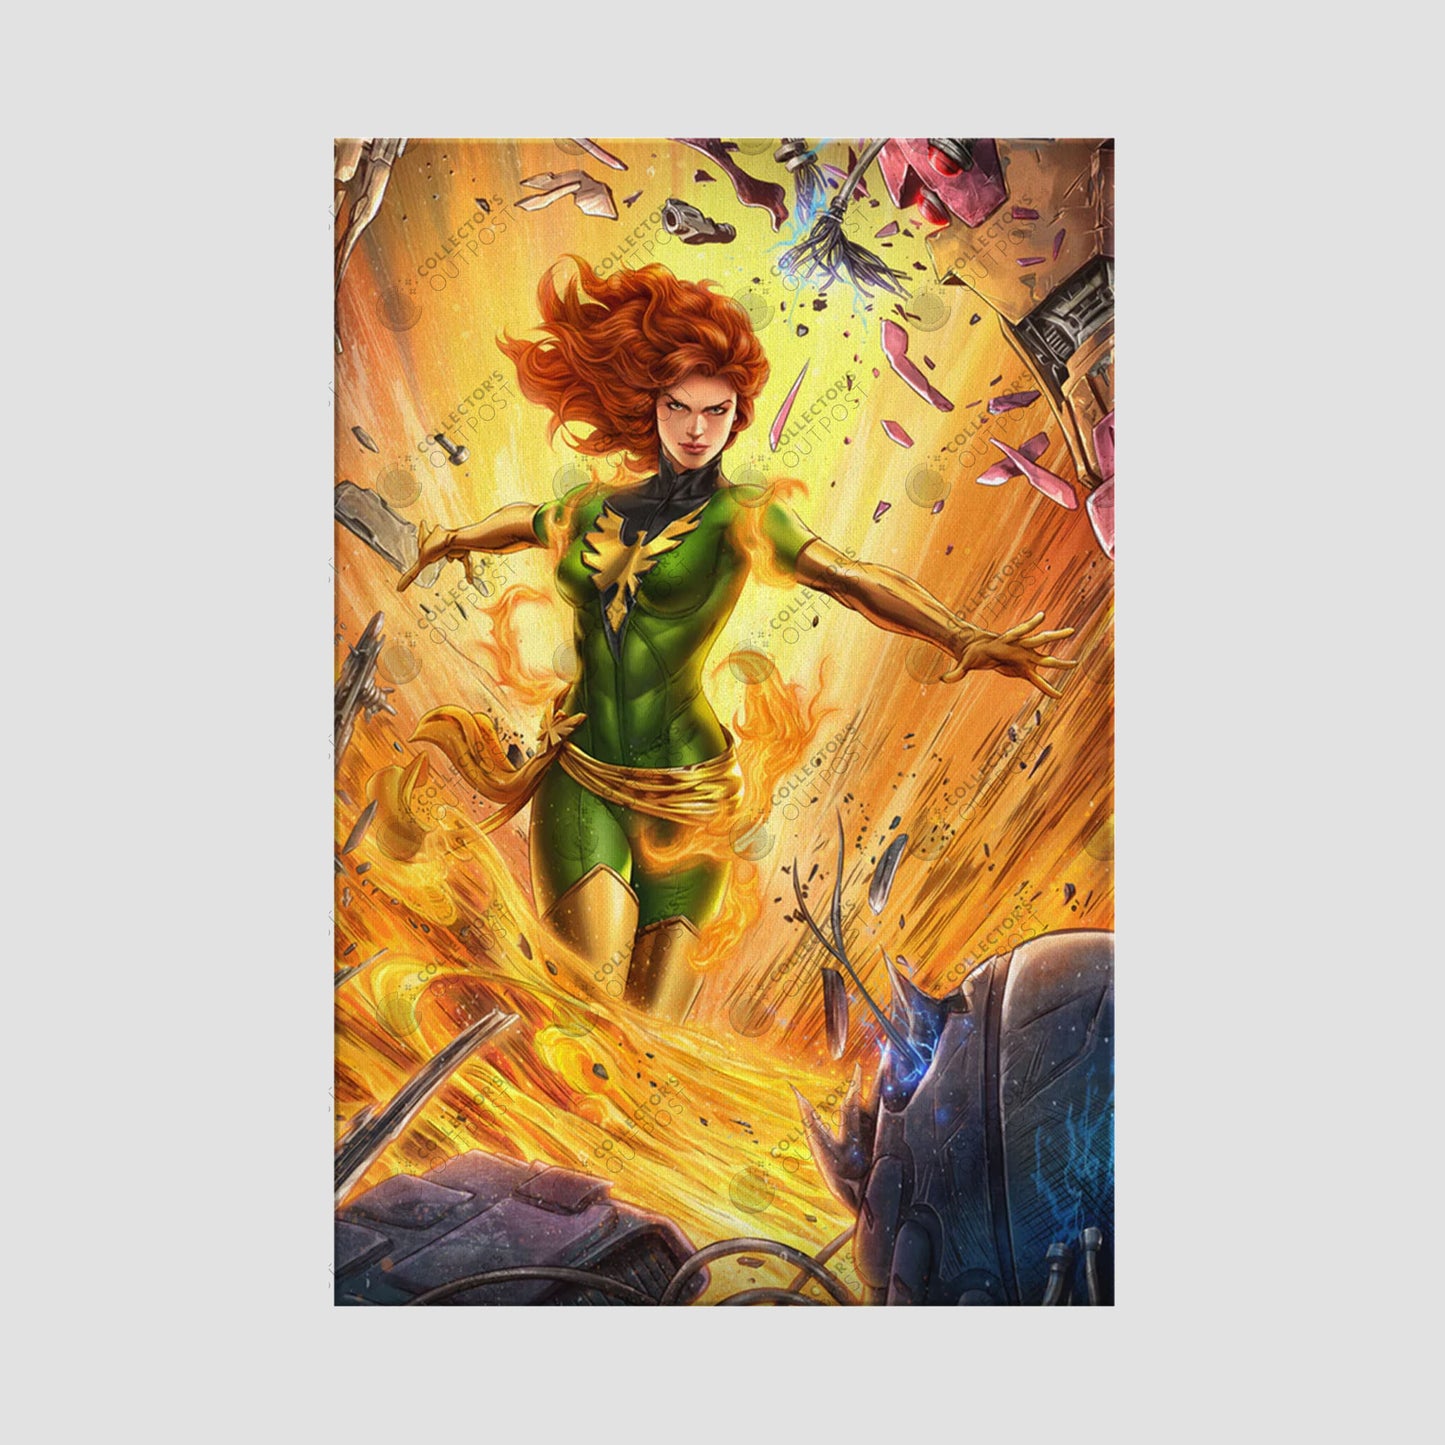 Jean Grey "The Phoenix" (X-Men) Marvel Comics Premium Art Print